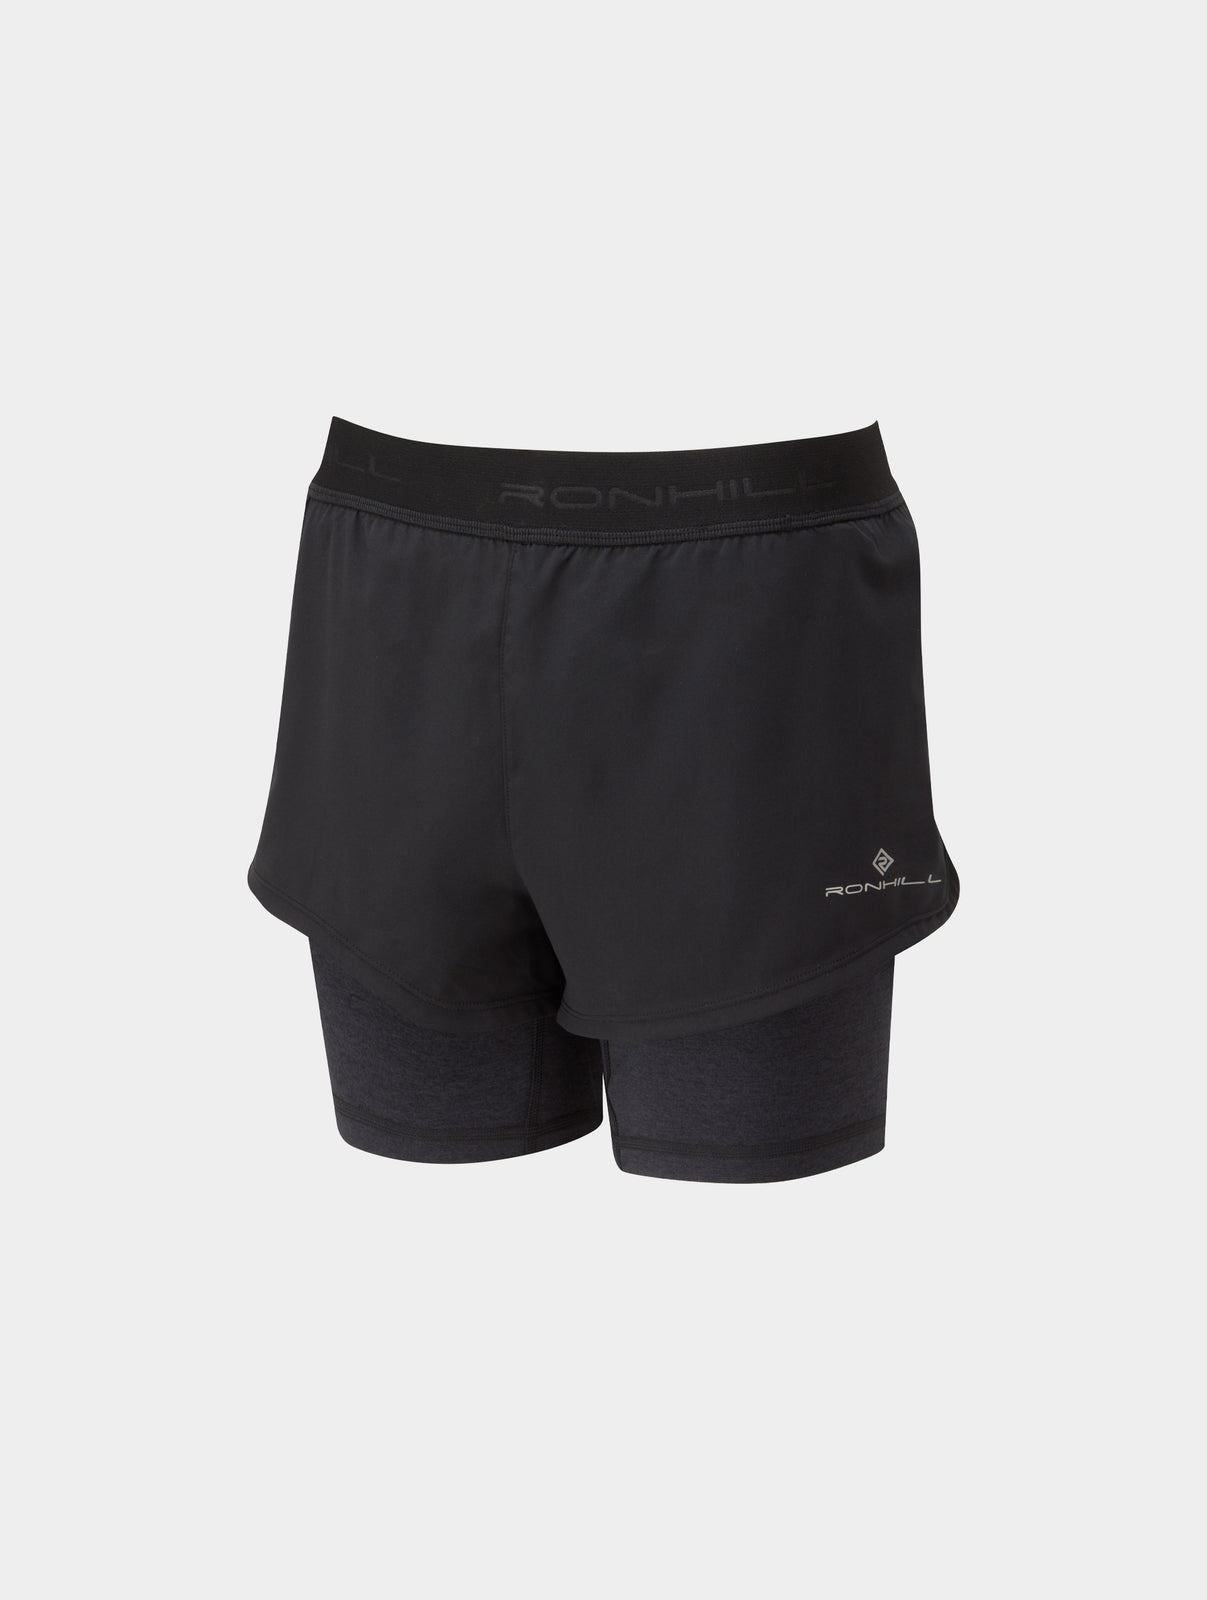 ronhill ladies shorts